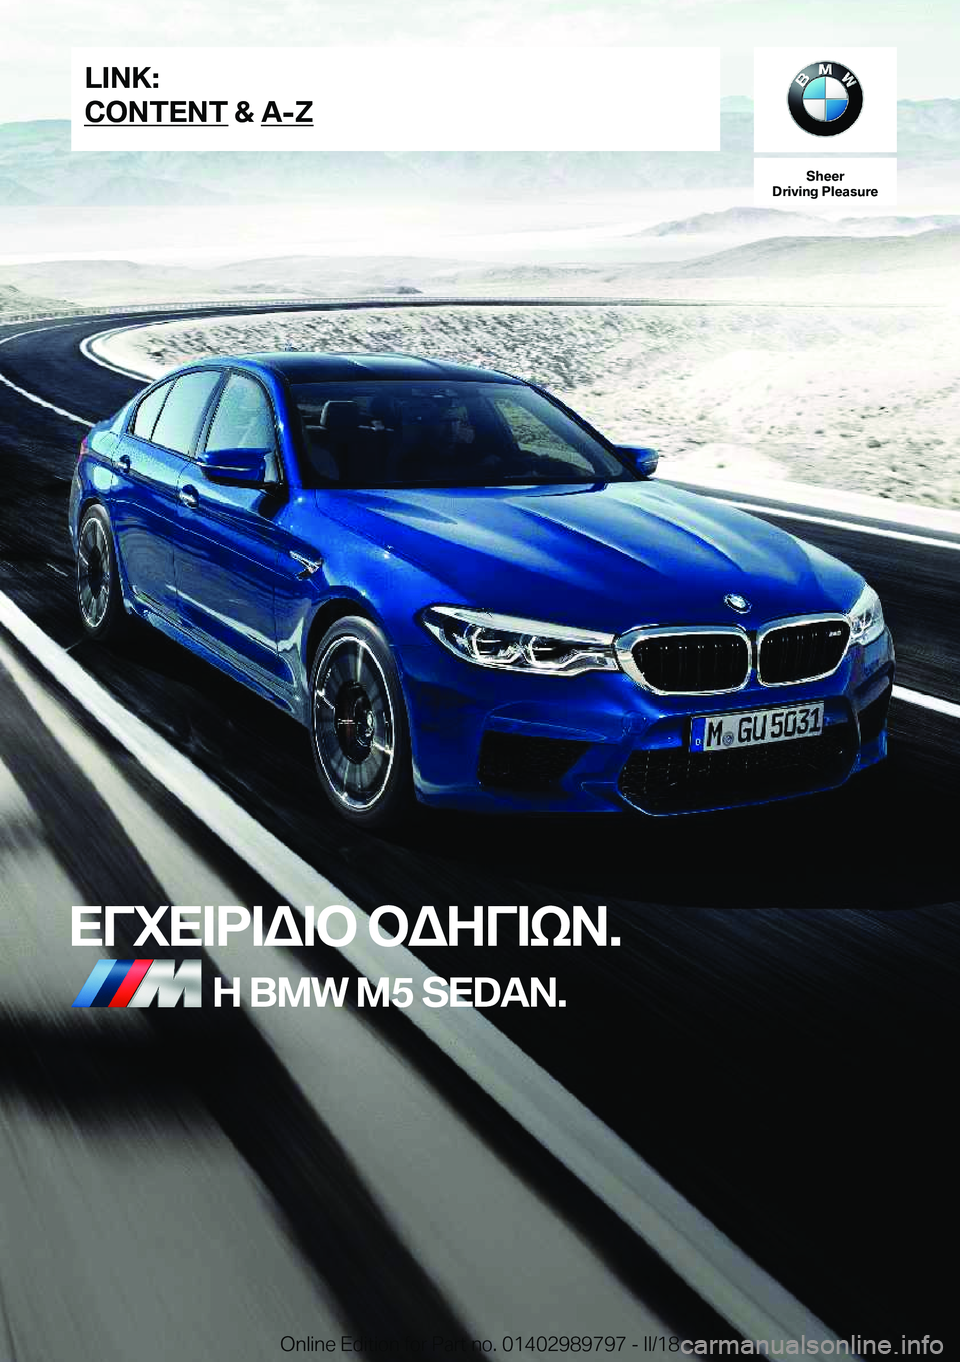 BMW M5 2018  ΟΔΗΓΌΣ ΧΡΉΣΗΣ (in Greek) �S�h�e�e�r
�D�r�i�v�i�n�g��P�l�e�a�s�u�r�e
XViX=d=W=b�bWZV=kA�.Z��B�M�W��M�5��S�E�D�A�N�.�L�I�N�K�:
�C�O�N�T�E�N�T��&��A�-�Z�O�n�l�i�n�e� �E�d�i�t�i�o�n� �f�o�r� �P�a�r�t� �n�